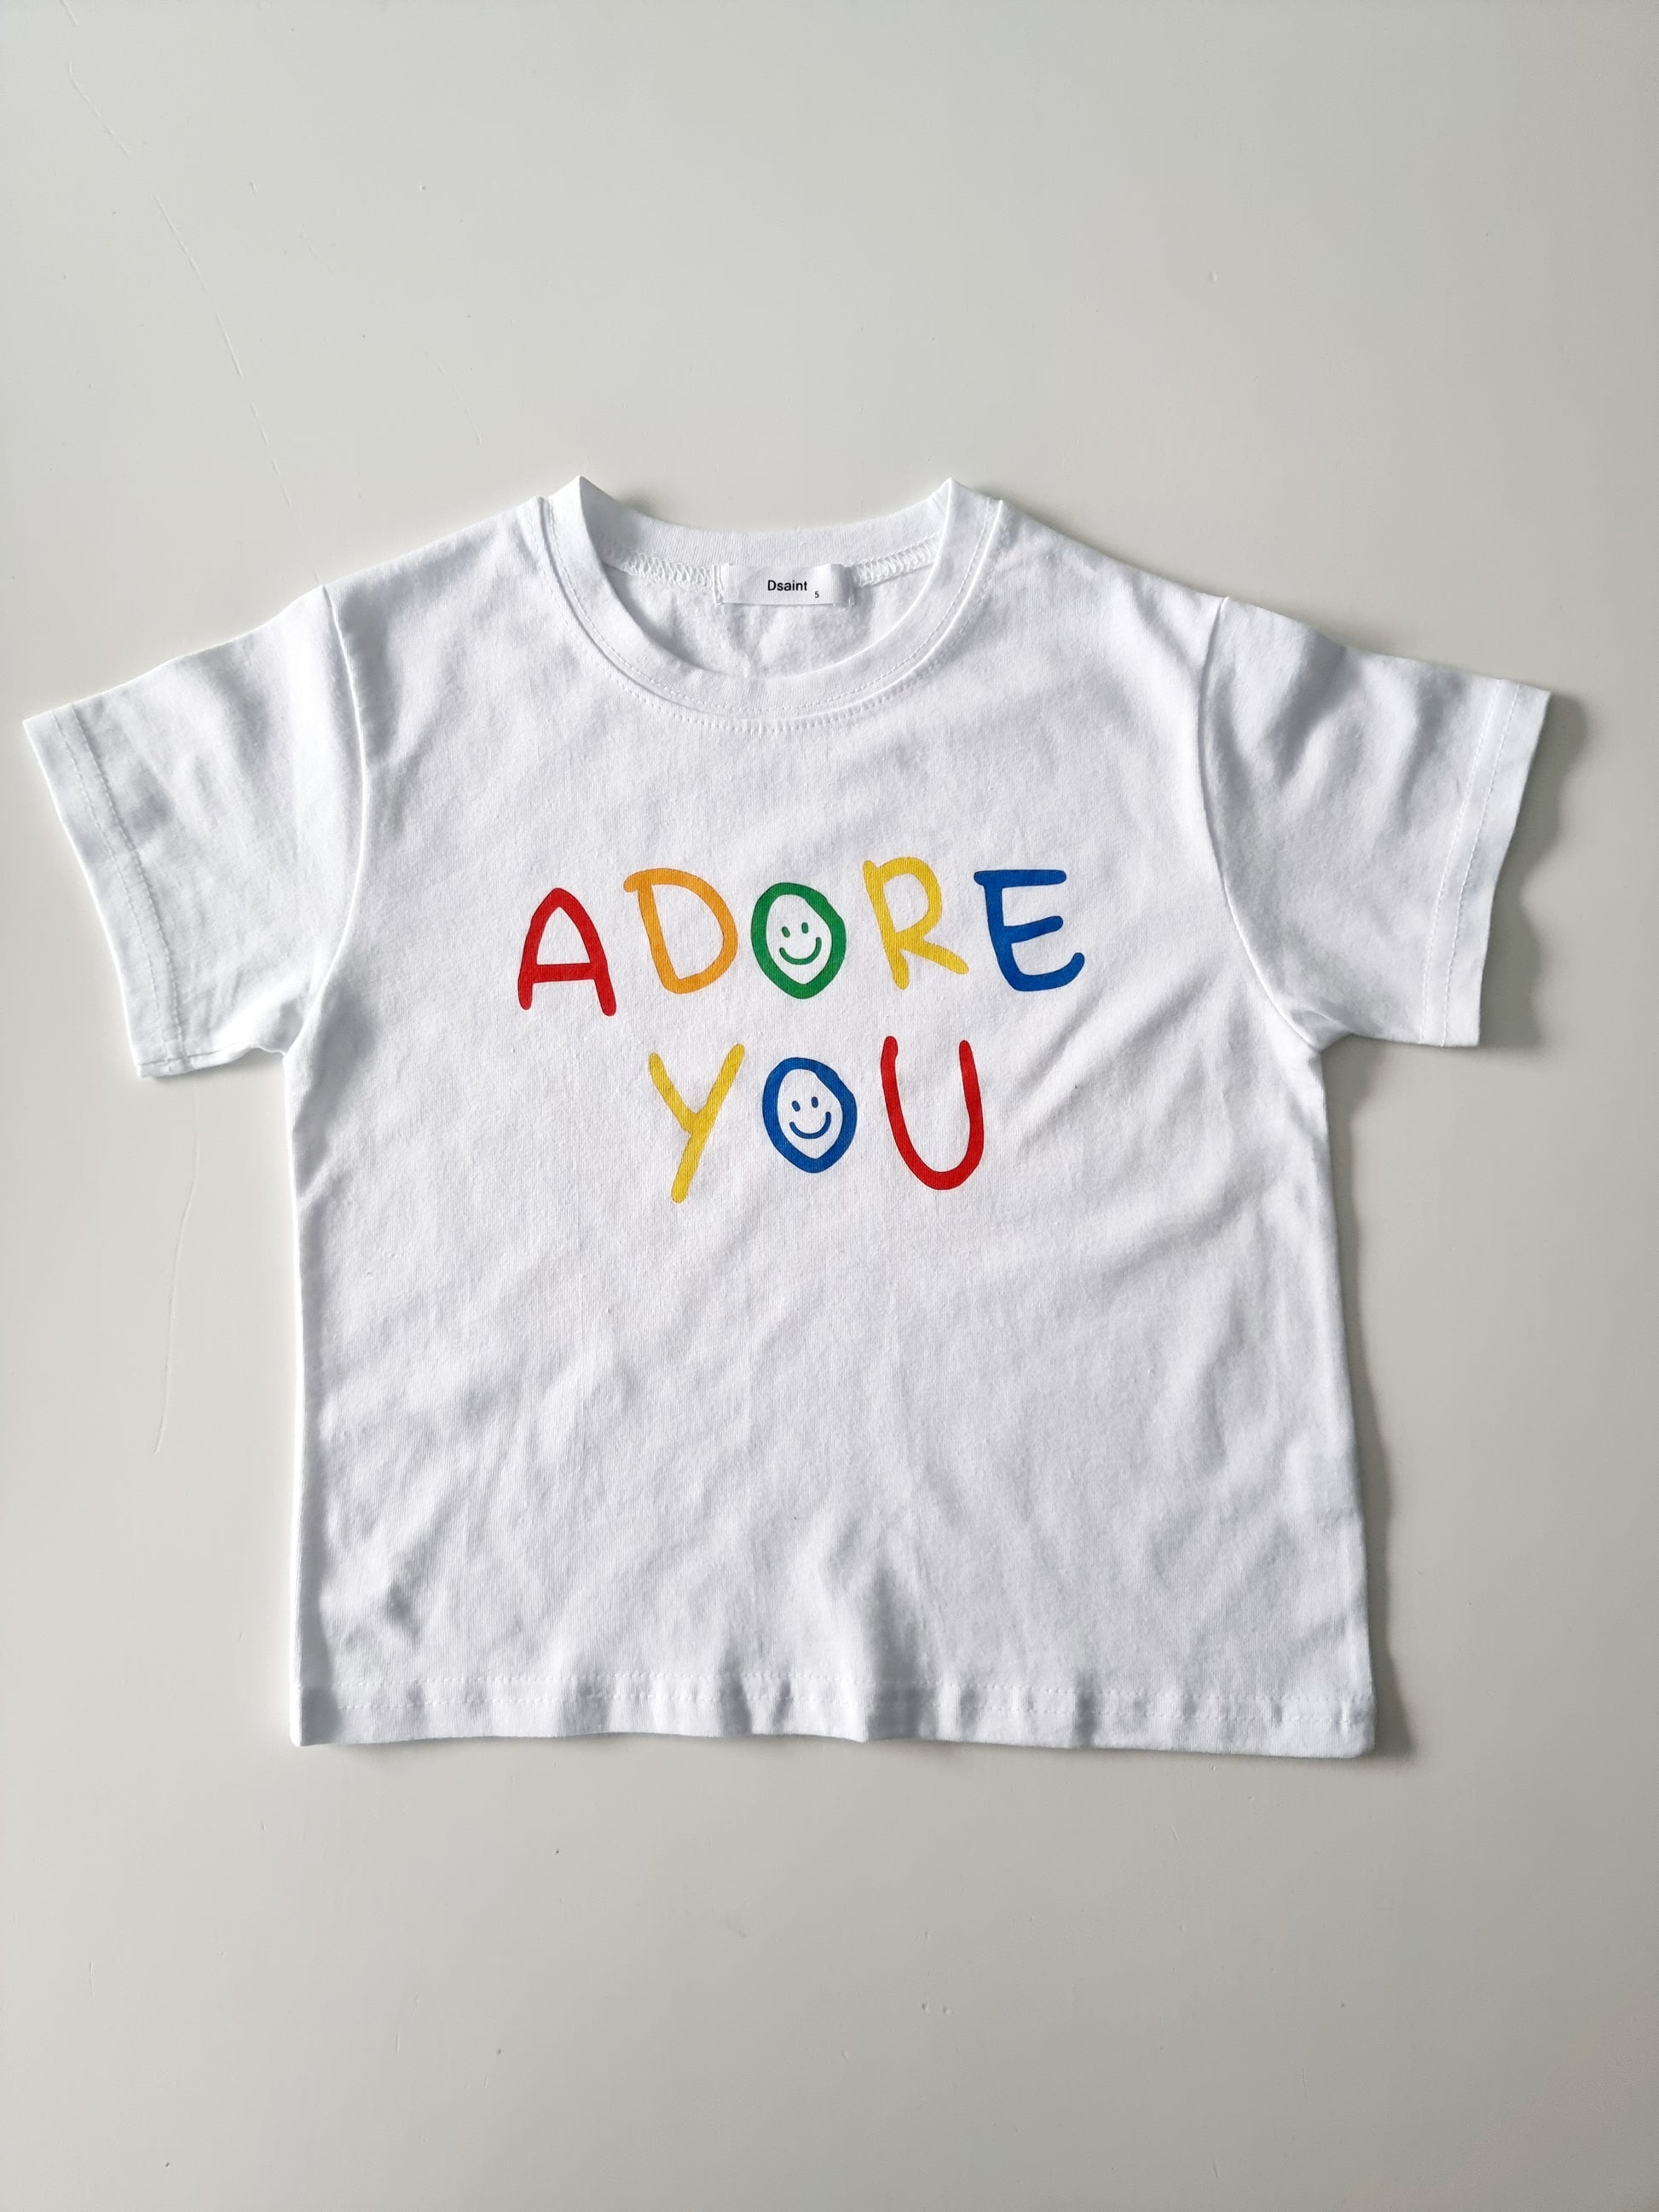 Adore You Unisex T-Shirt | Fun Design in 3 Colors | 100% Cotton - Made in Korea